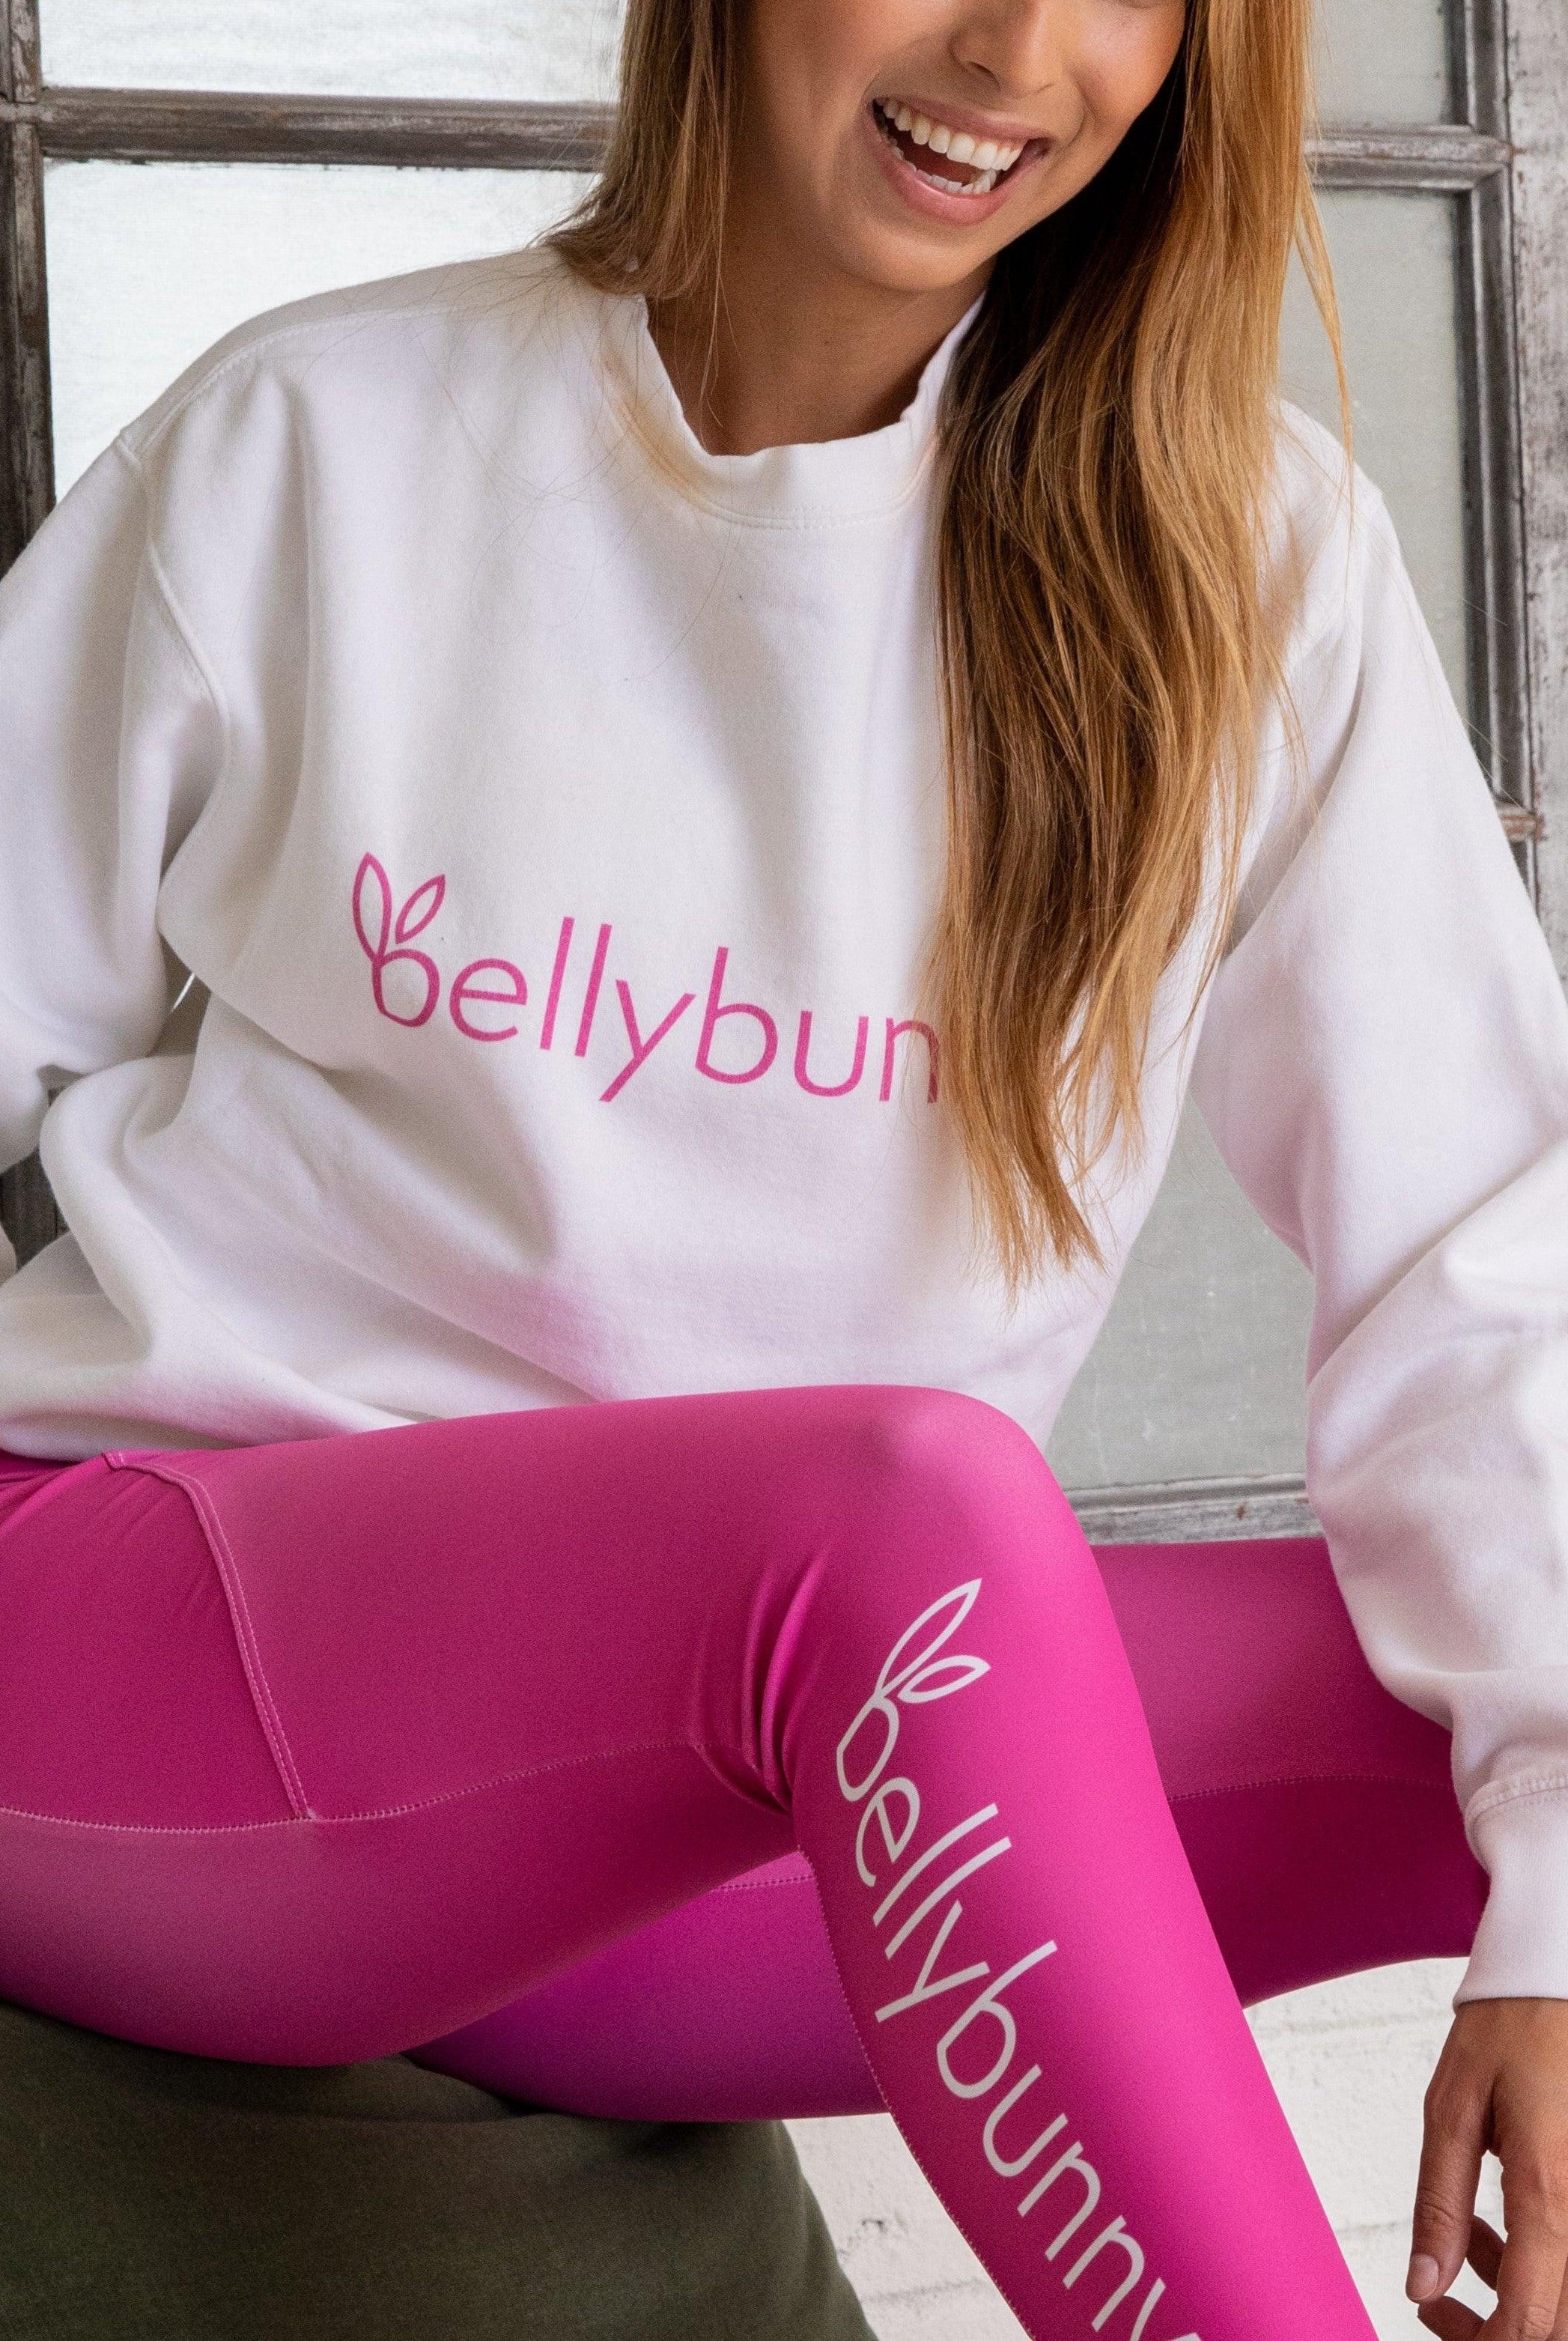 Bellybunny Sweatshirt white with pink logo